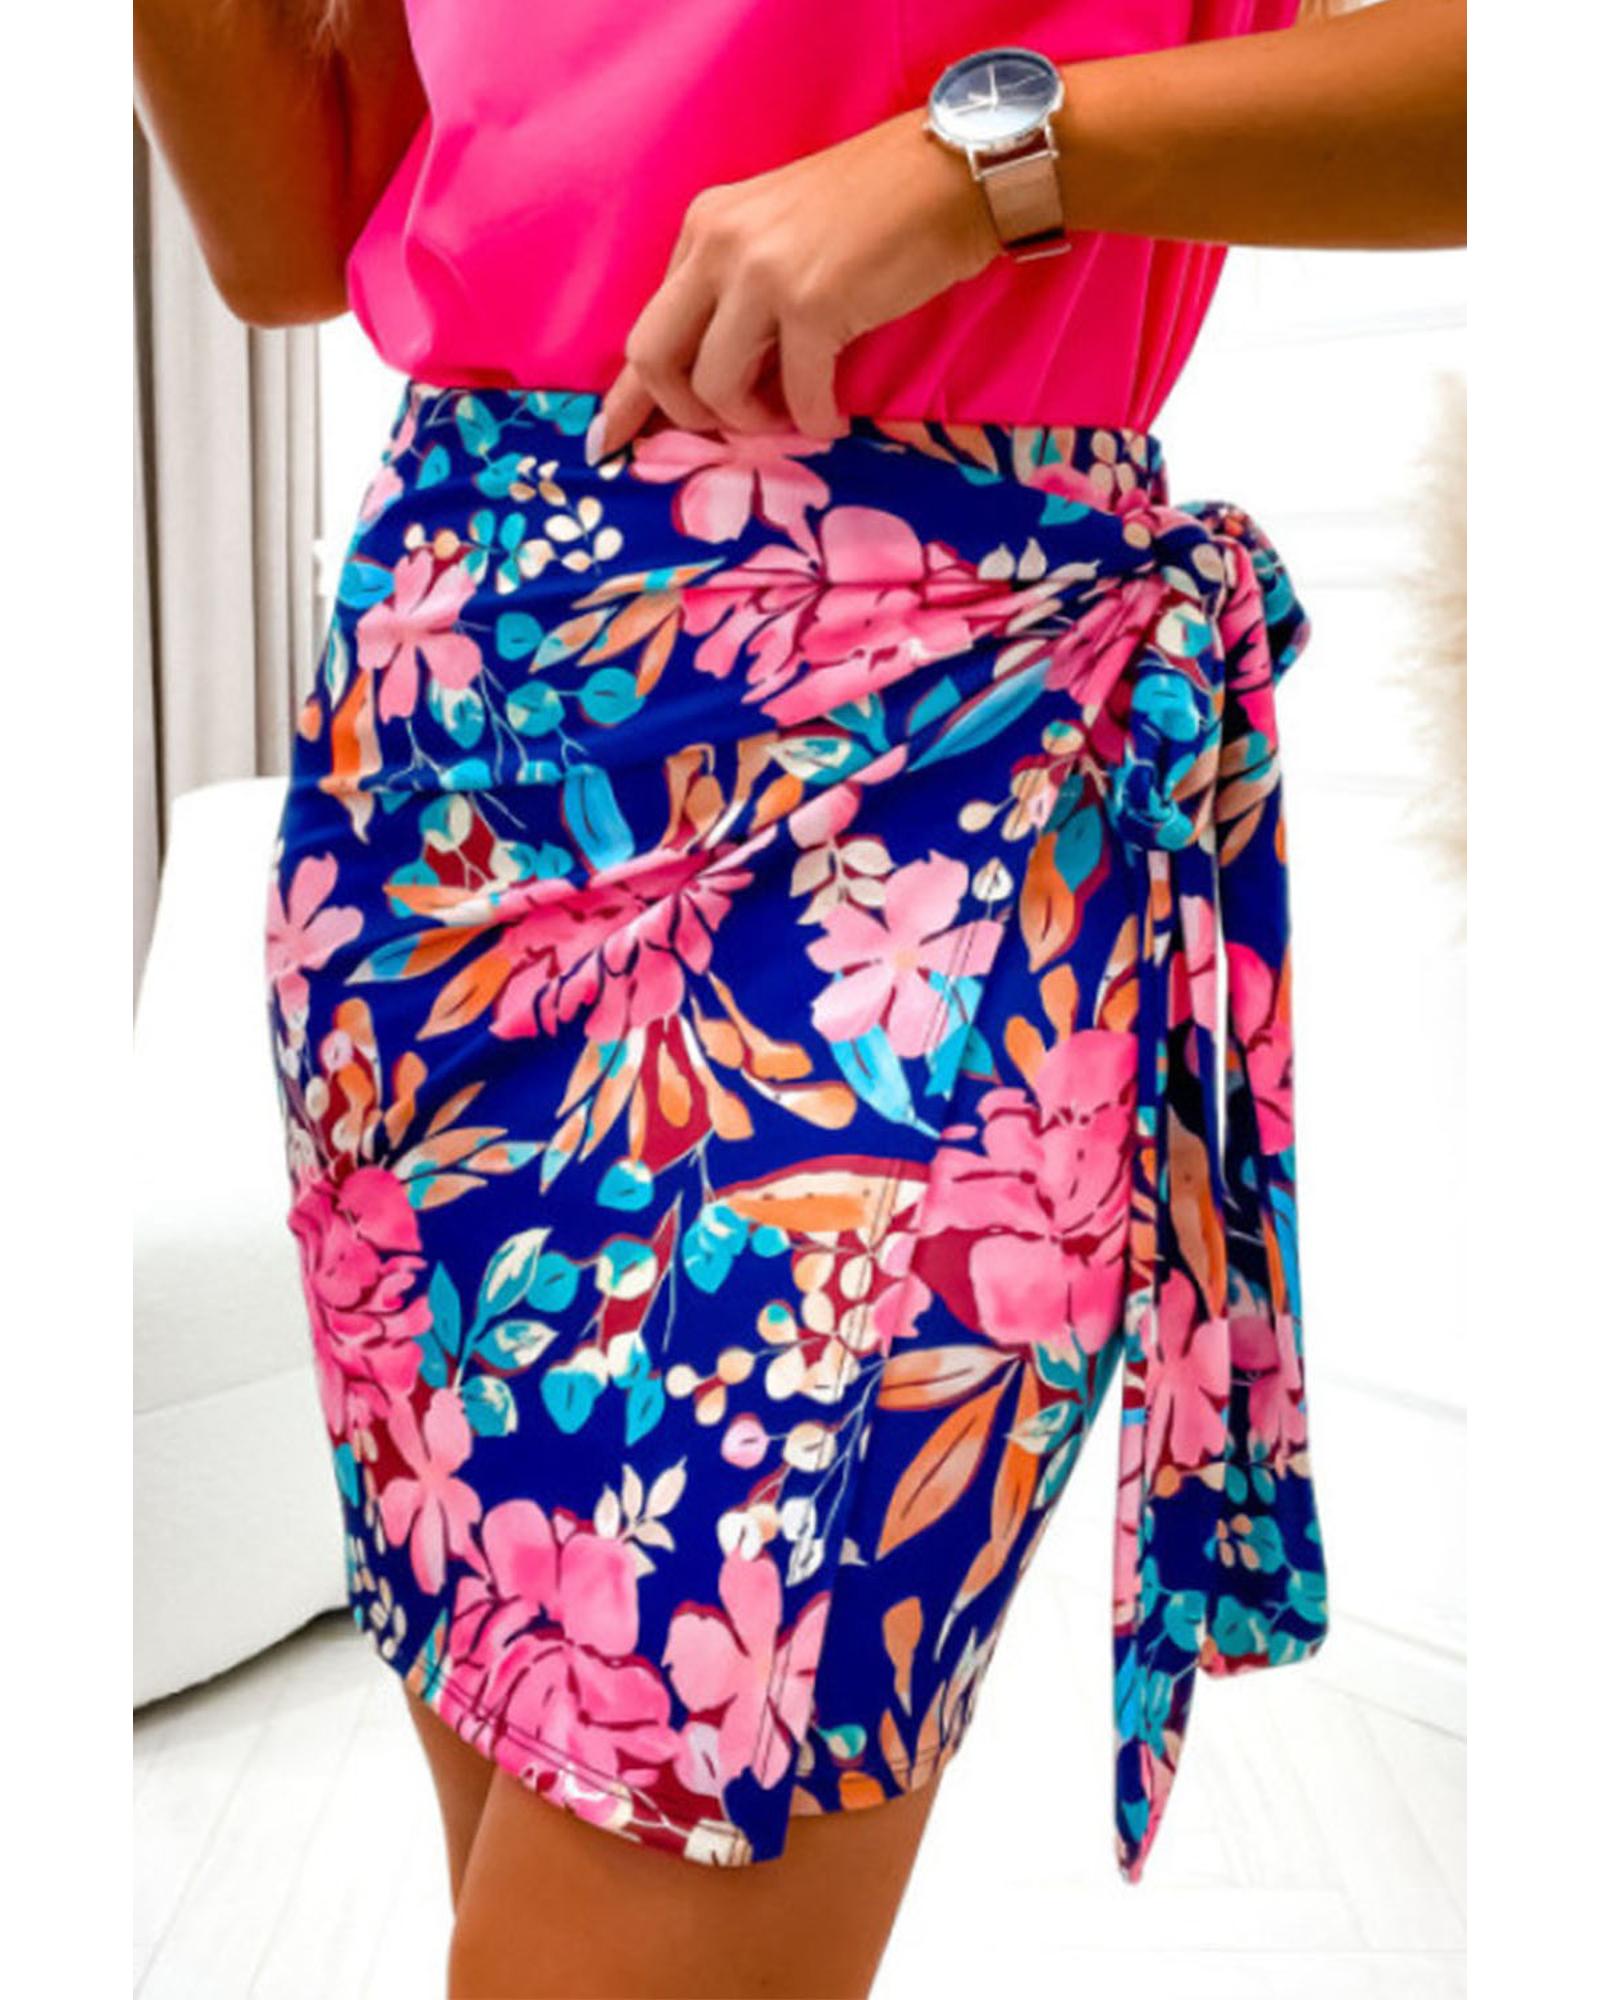 Floral Print Lace-up Bodycon Mini Skirt - L